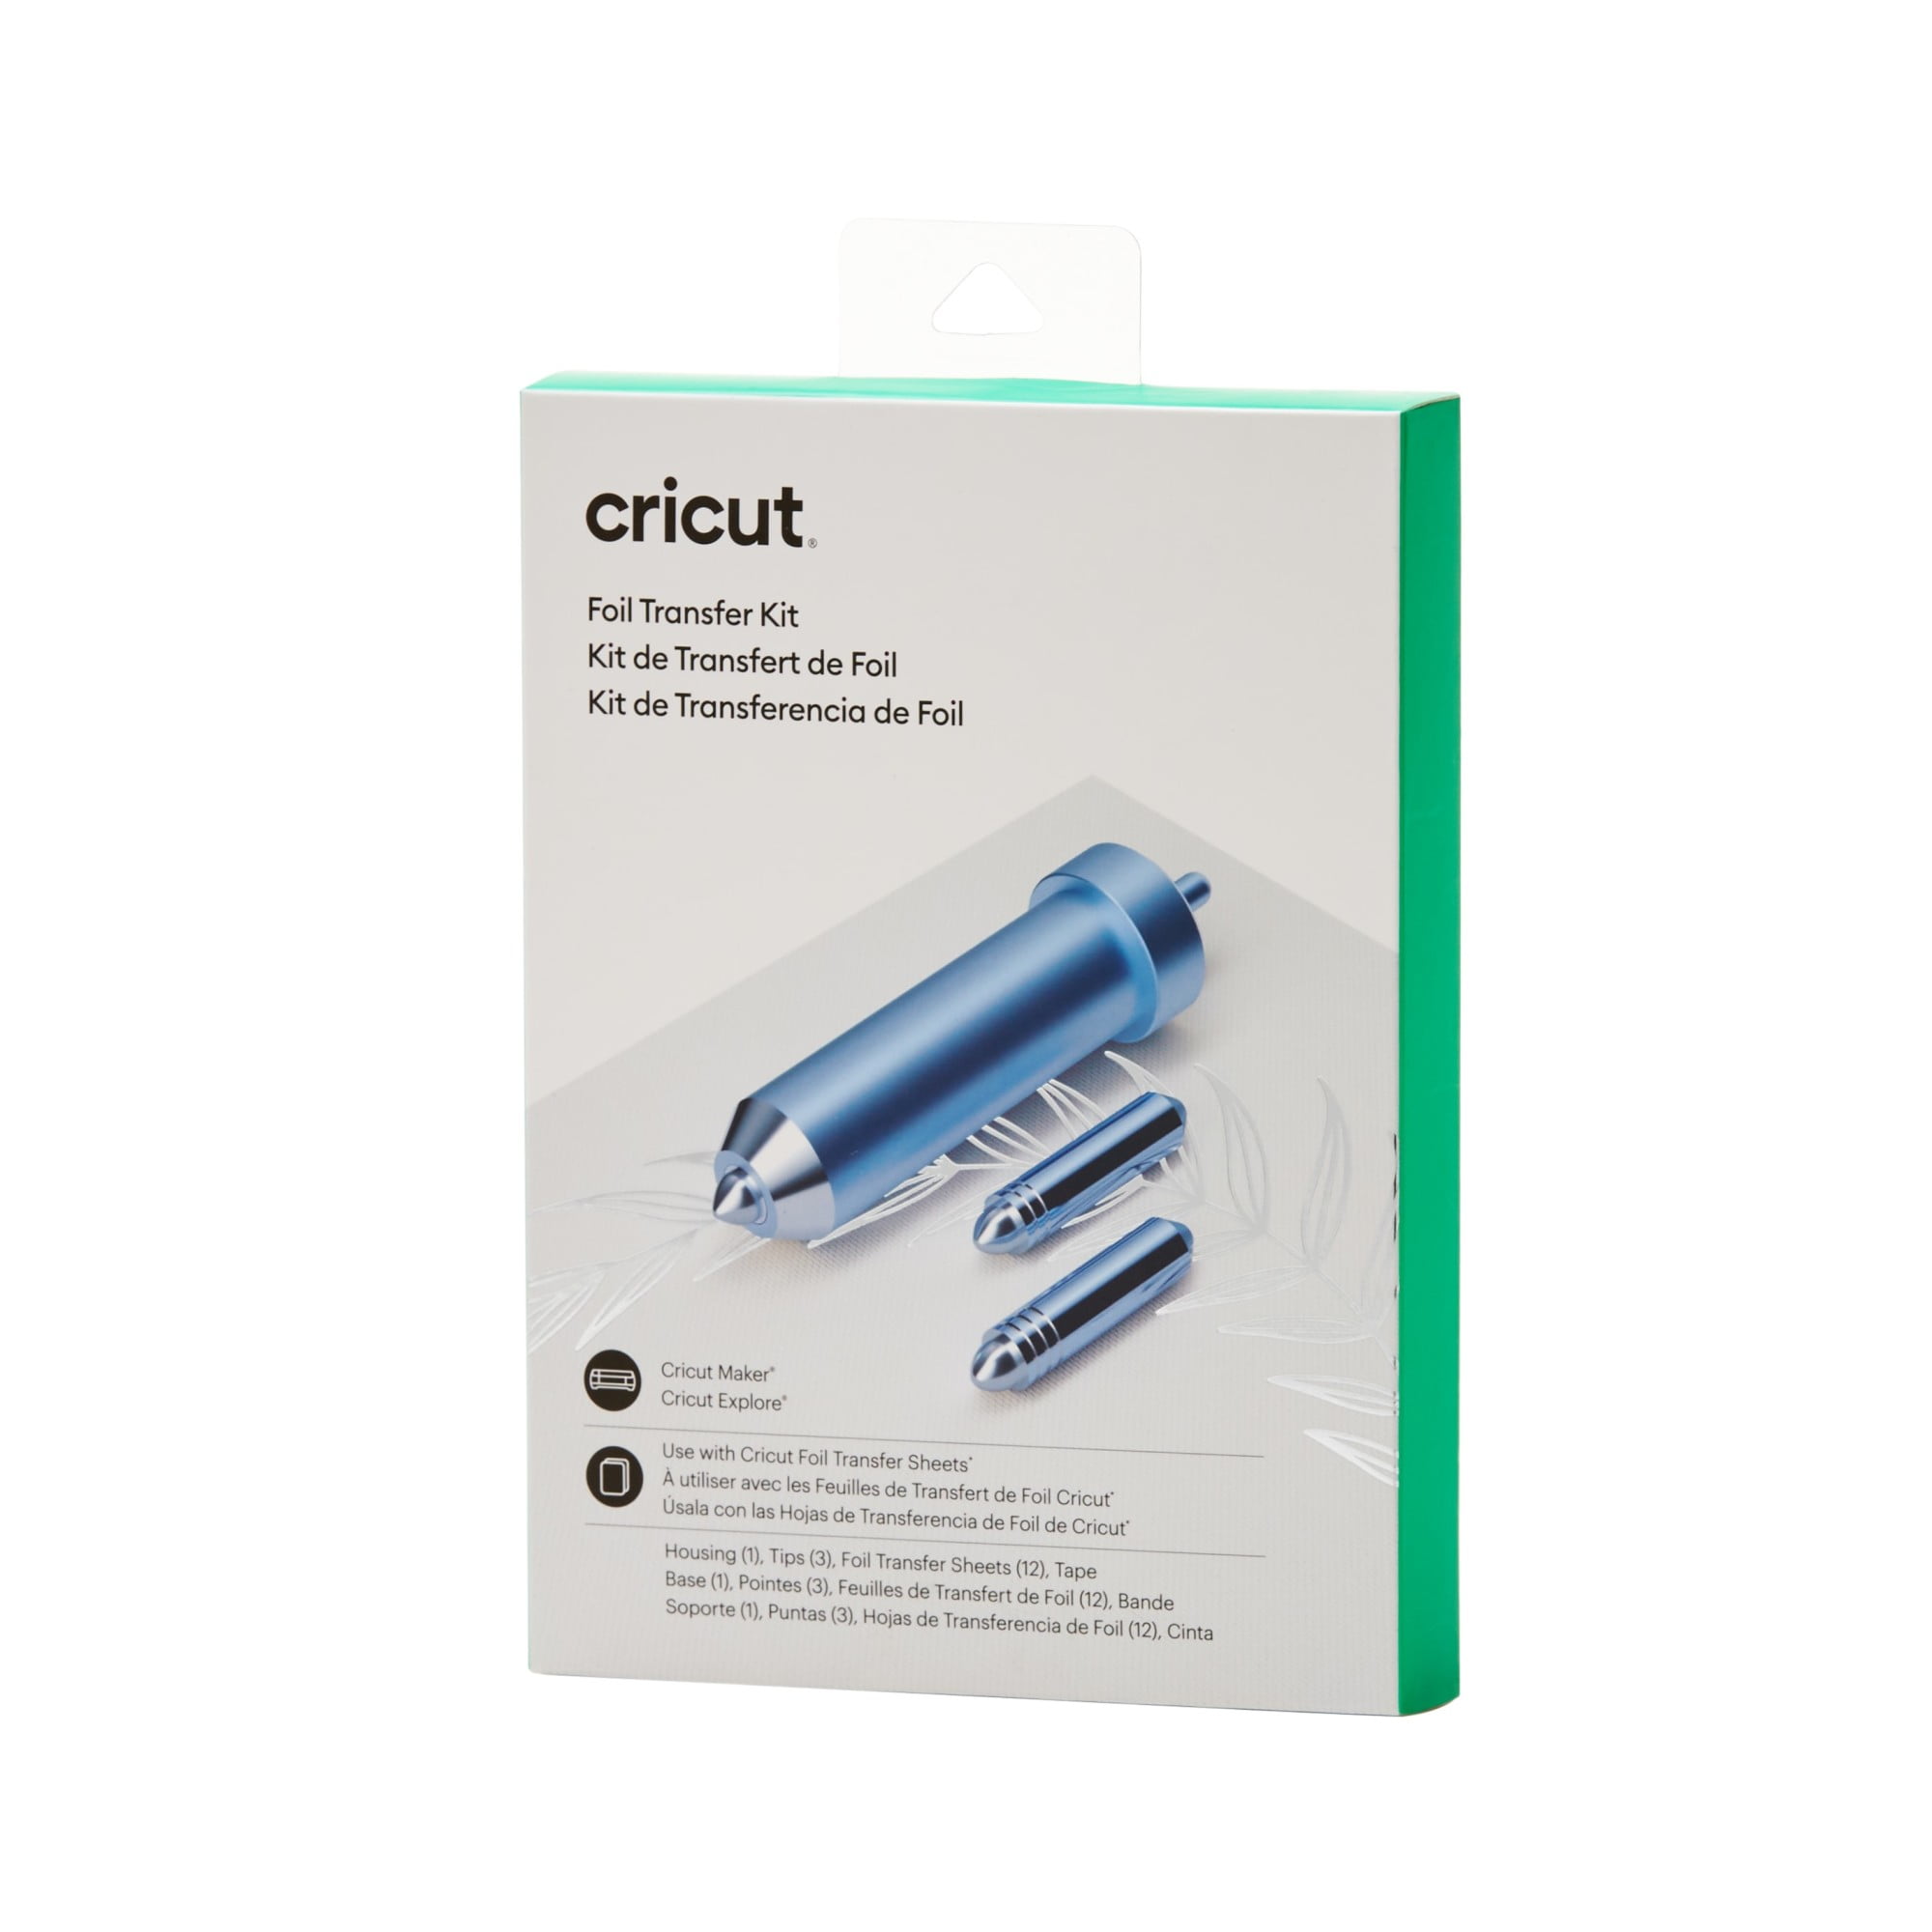 What Is Cricut Foil Transfer Kit - Tastefully Frugal